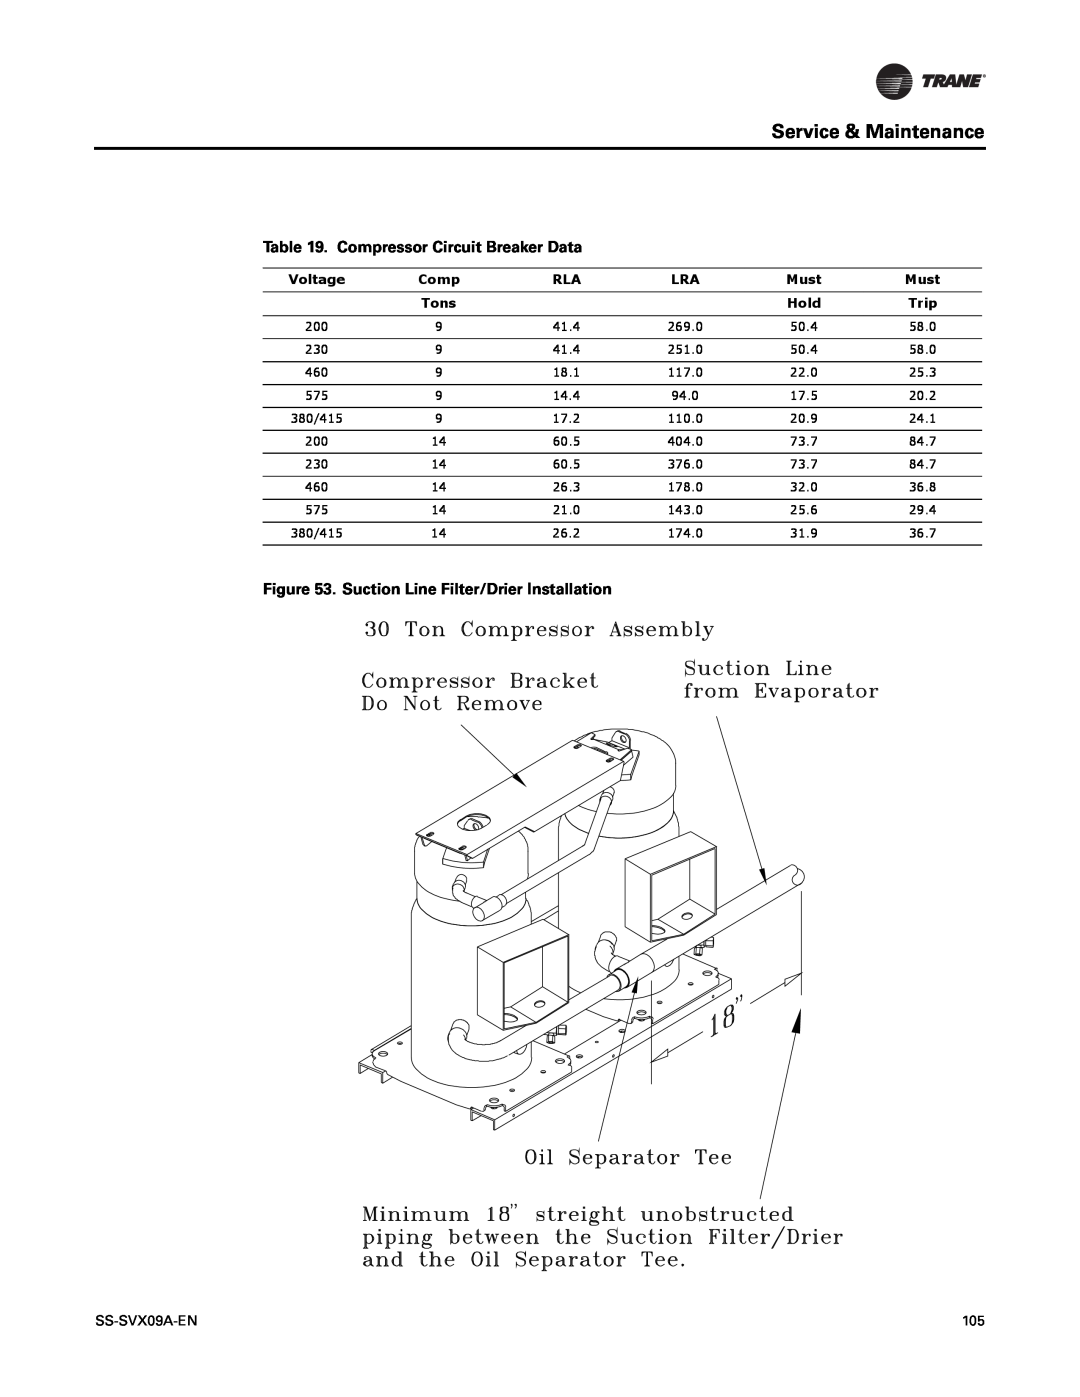 Trane RAUC-C20, RAUC-C50 Service & Maintenance, Compressor Circuit Breaker Data, Suction Line Filter/Drier Installation 